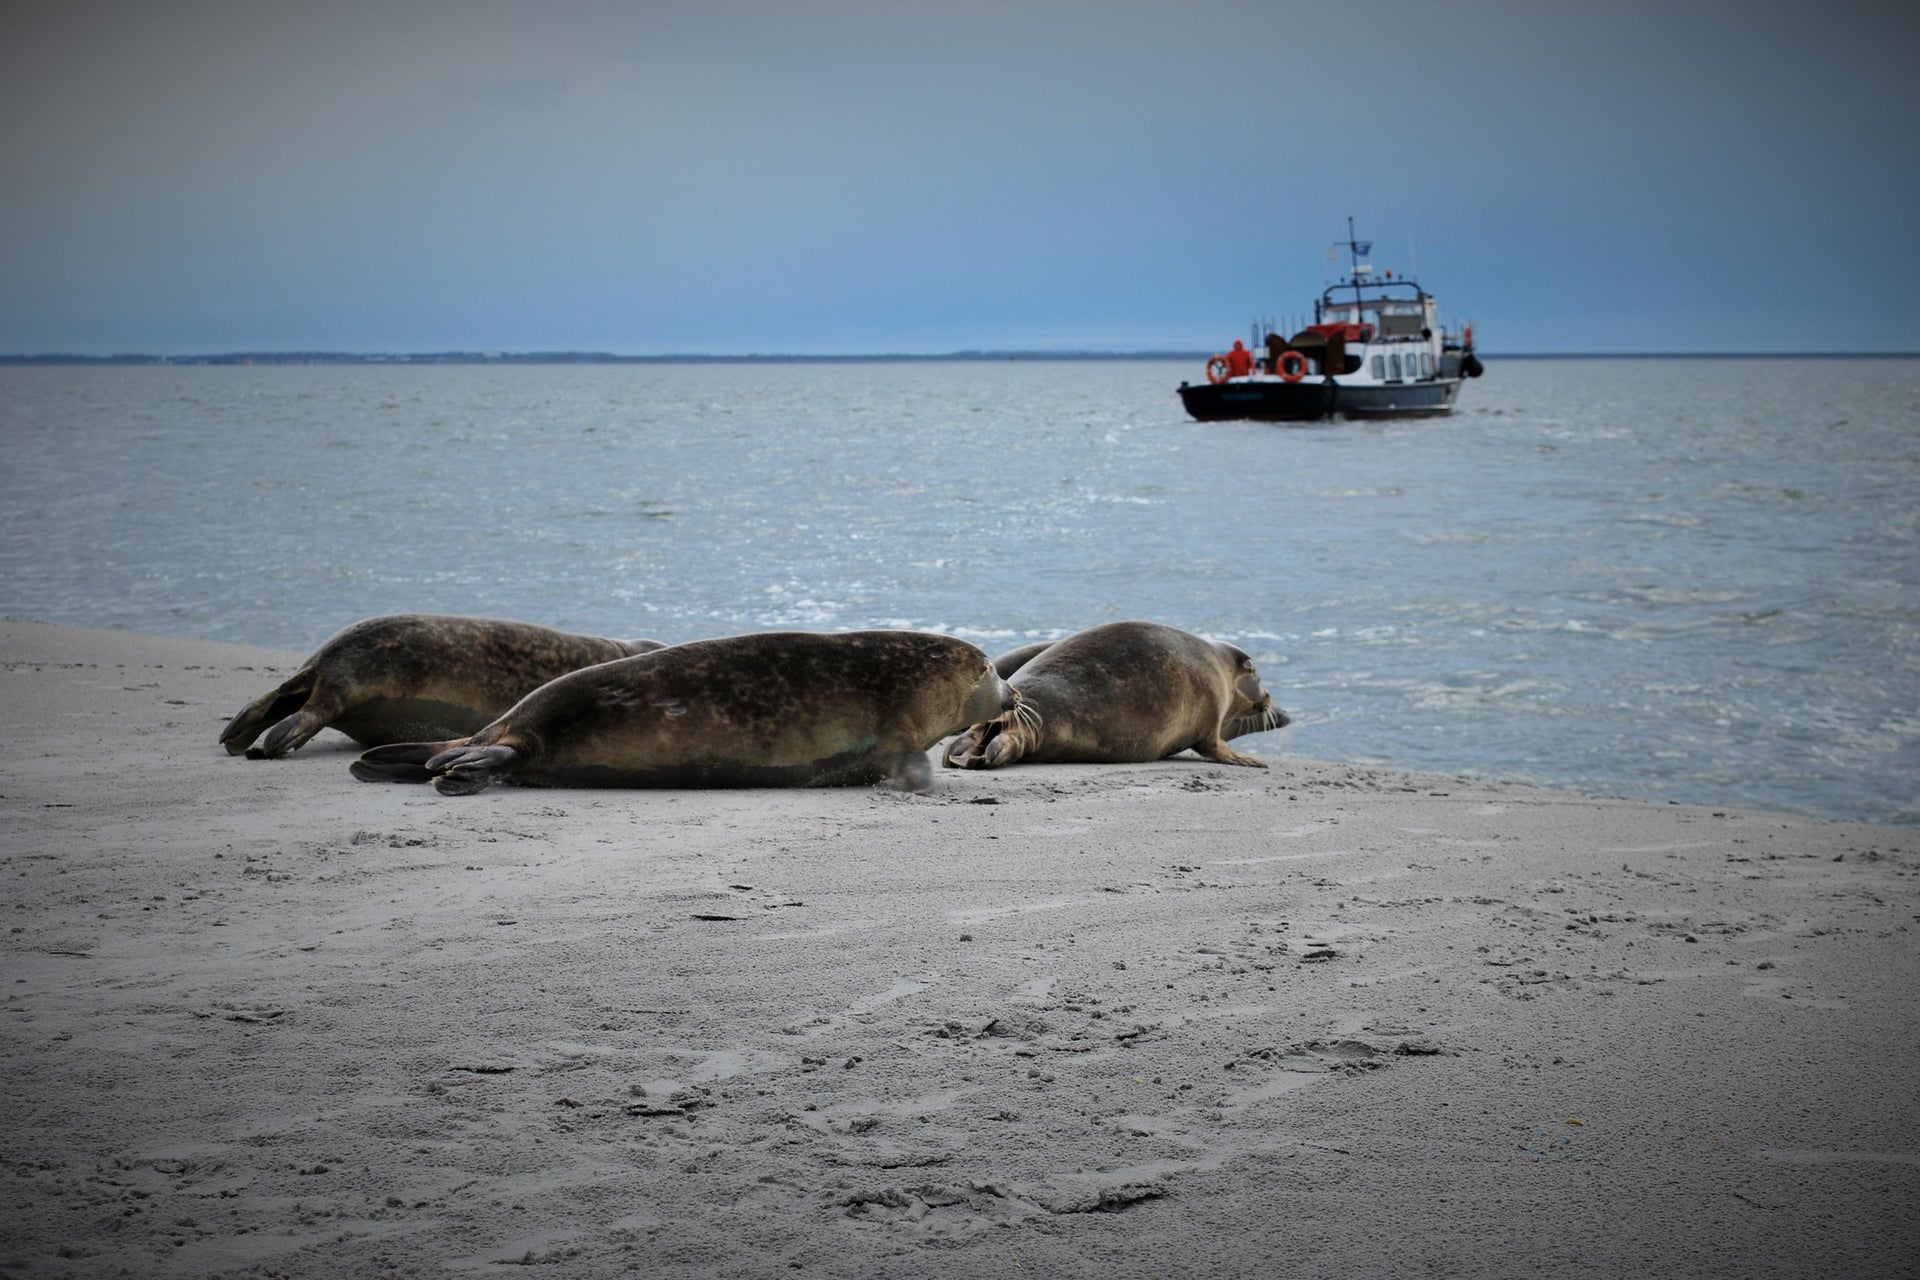 Wadden Sea Cruise and Seal Safari